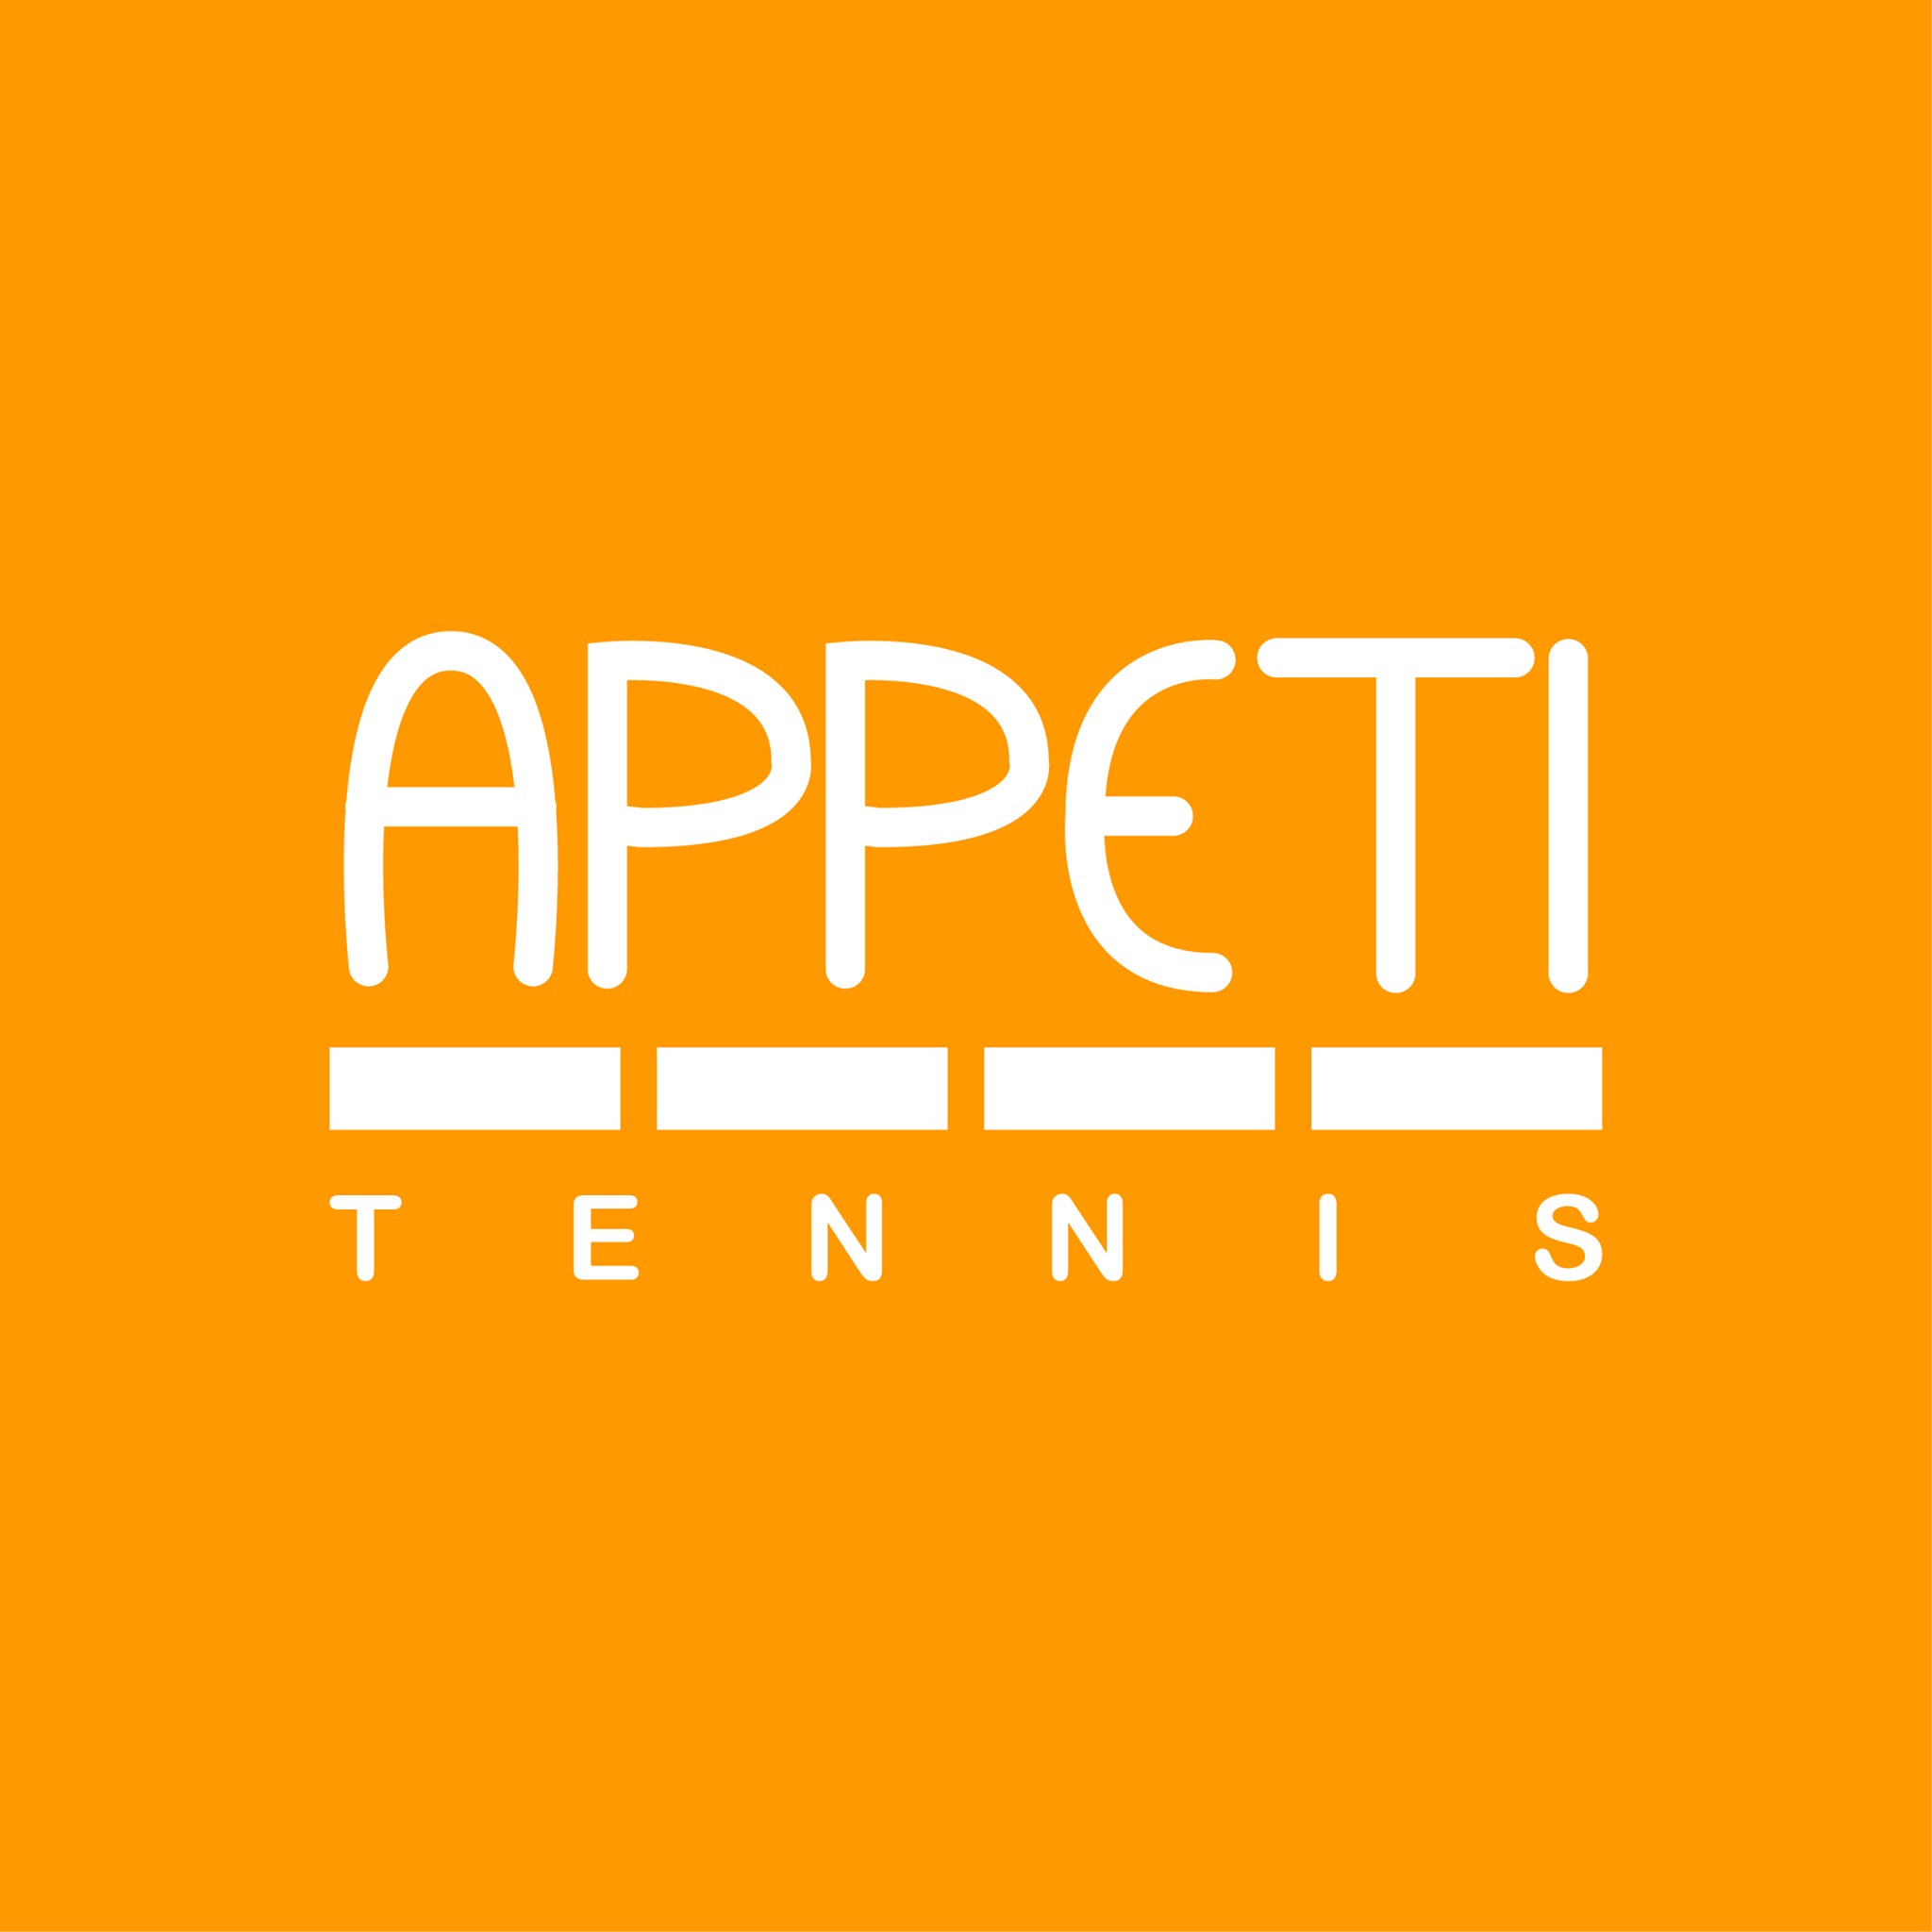 The Appeti Tennis Centre Online Store